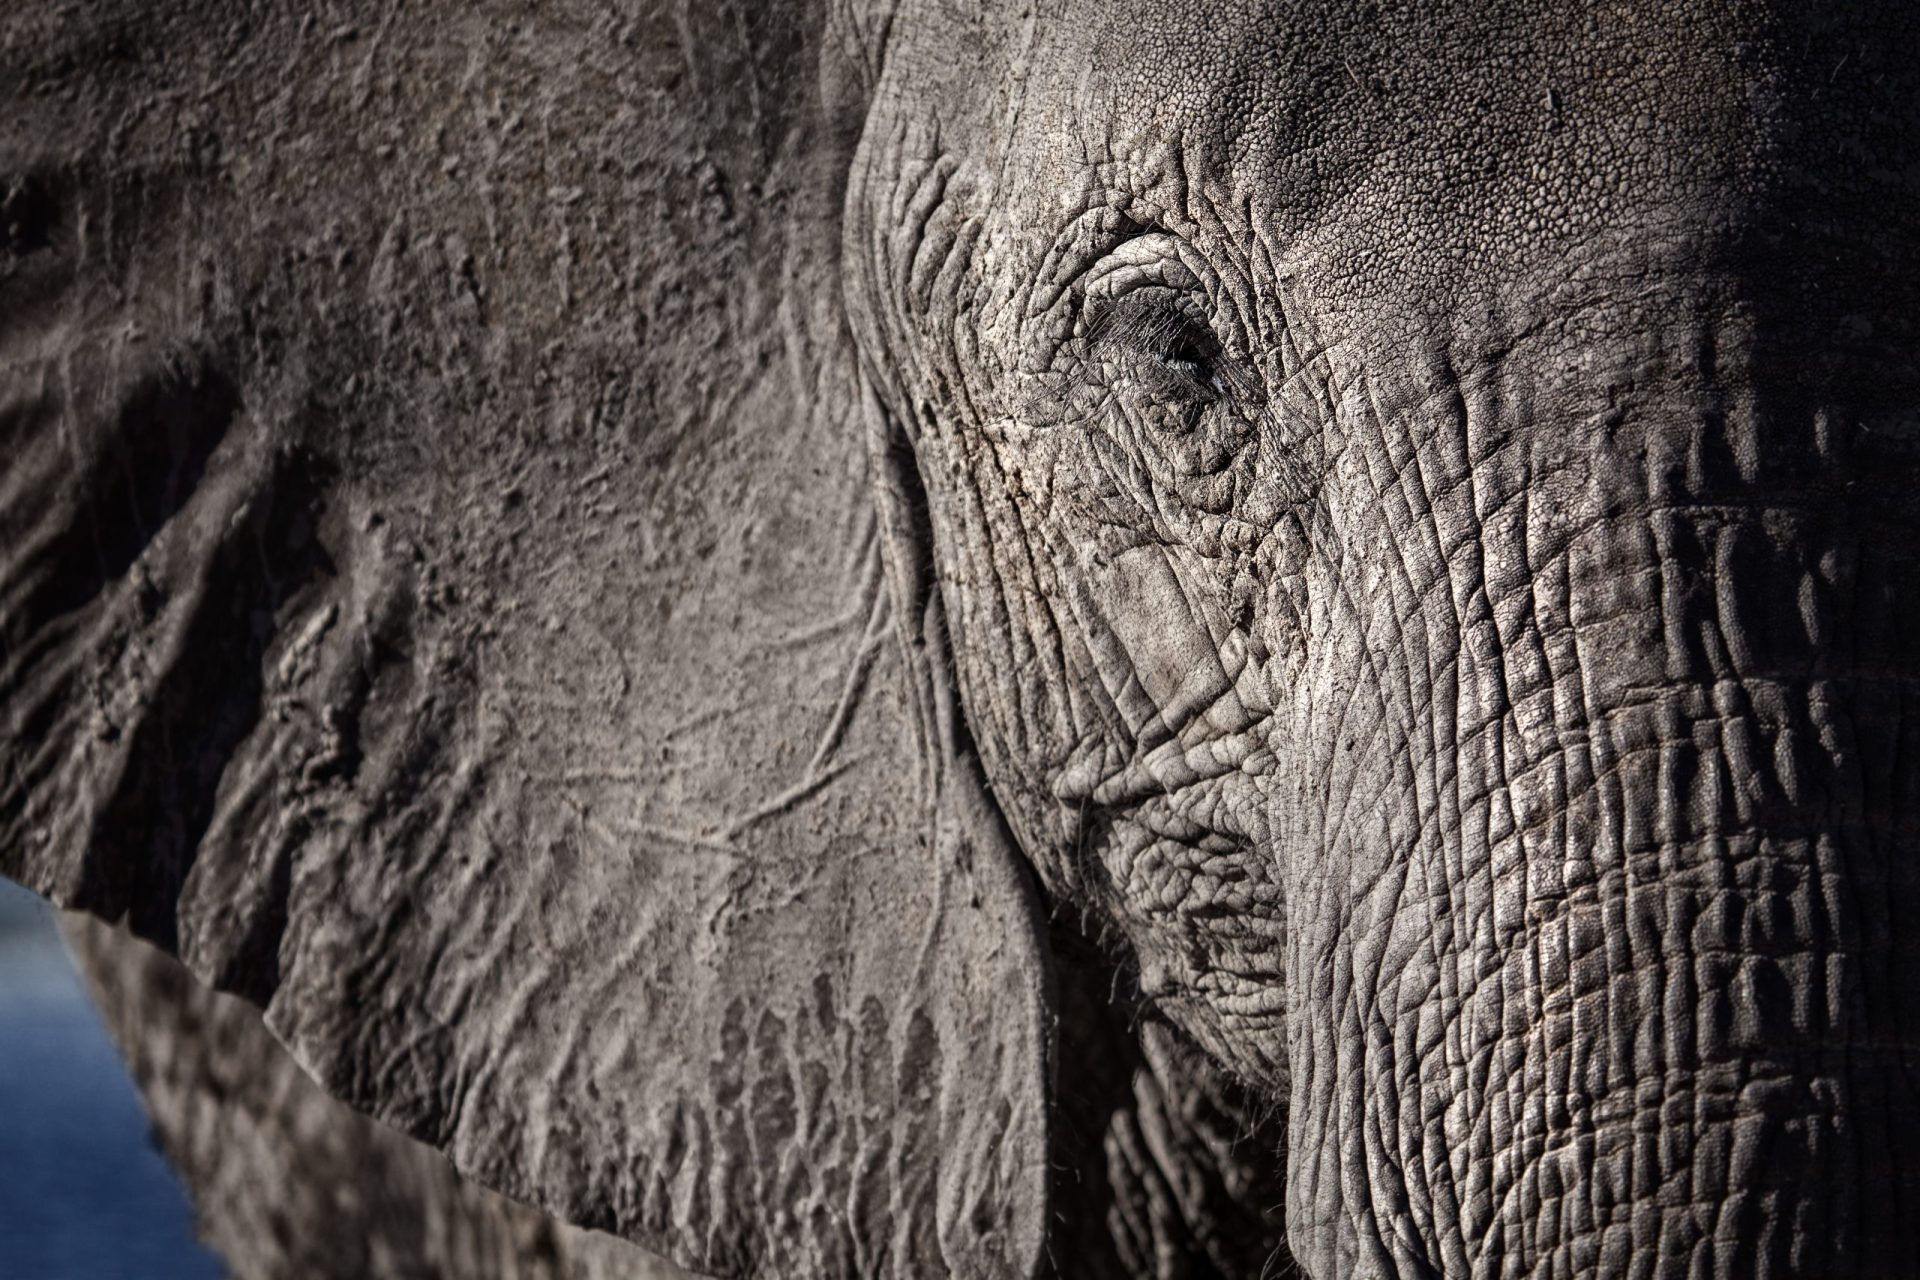 Catorze elefantes morreram envenenados no Zimbabué